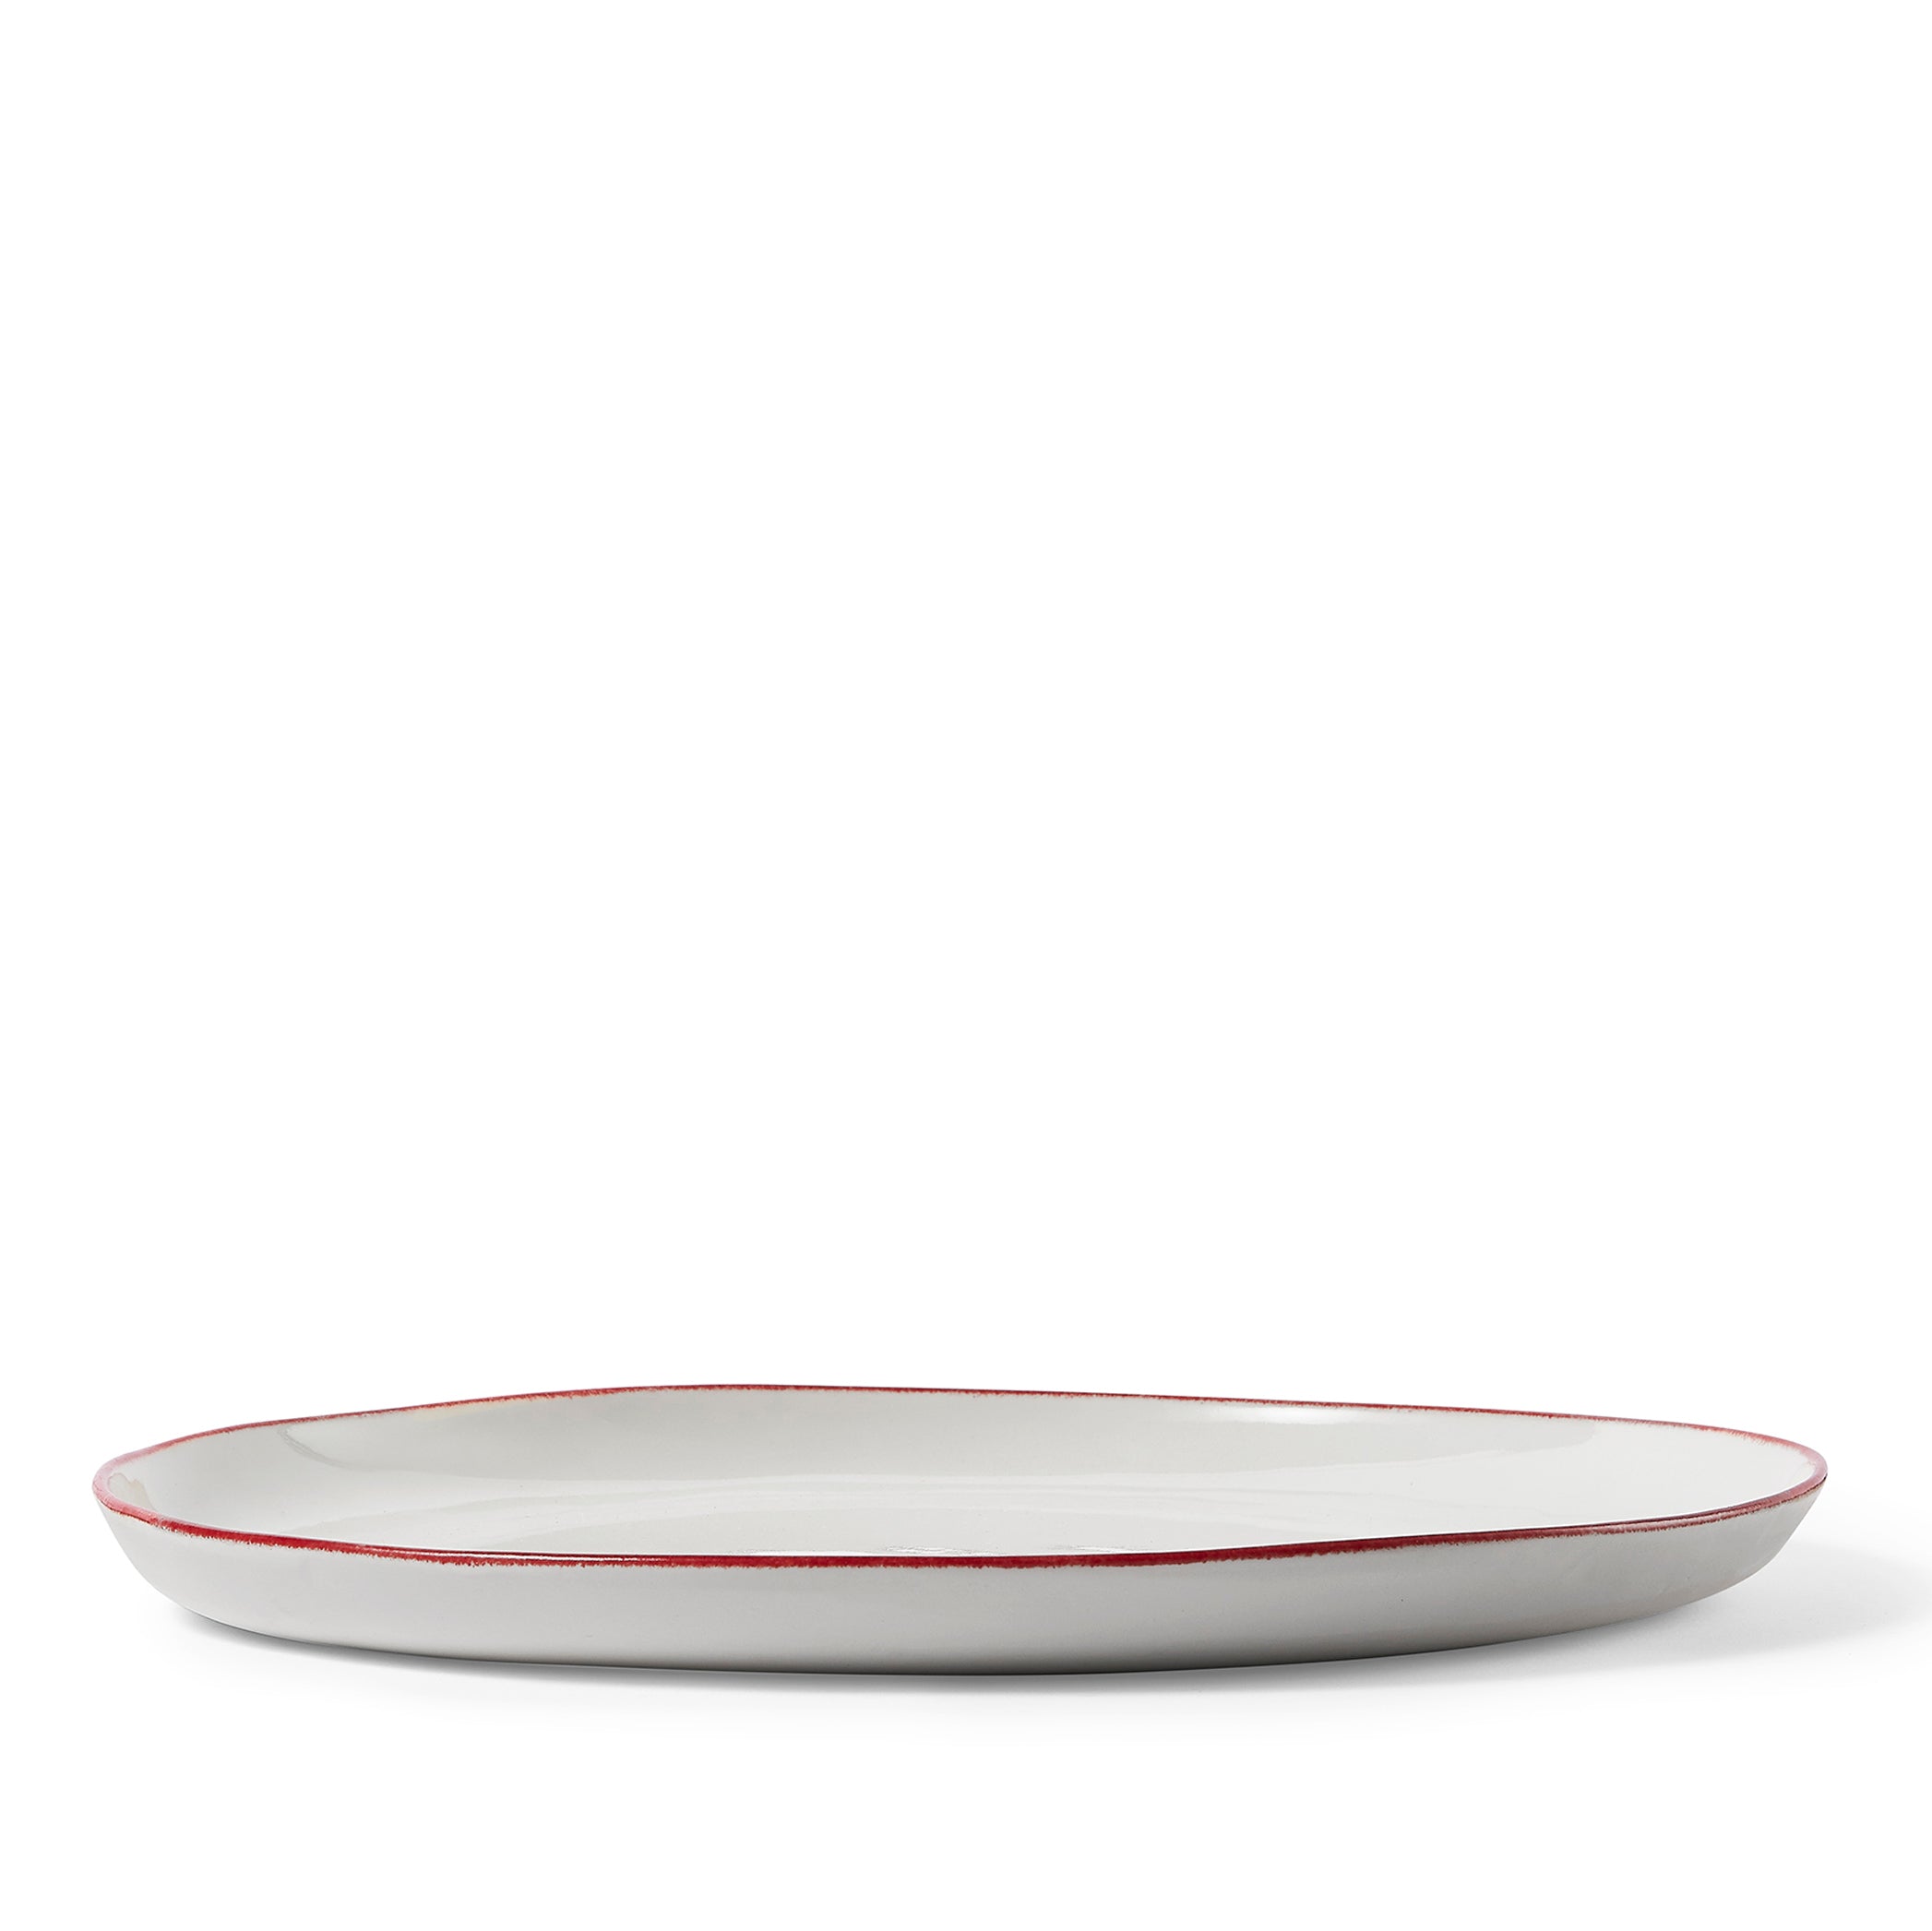 Made to order - Summerill & Bishop Handmade 31cm Porcelain Dinner Plate with Pink Rim